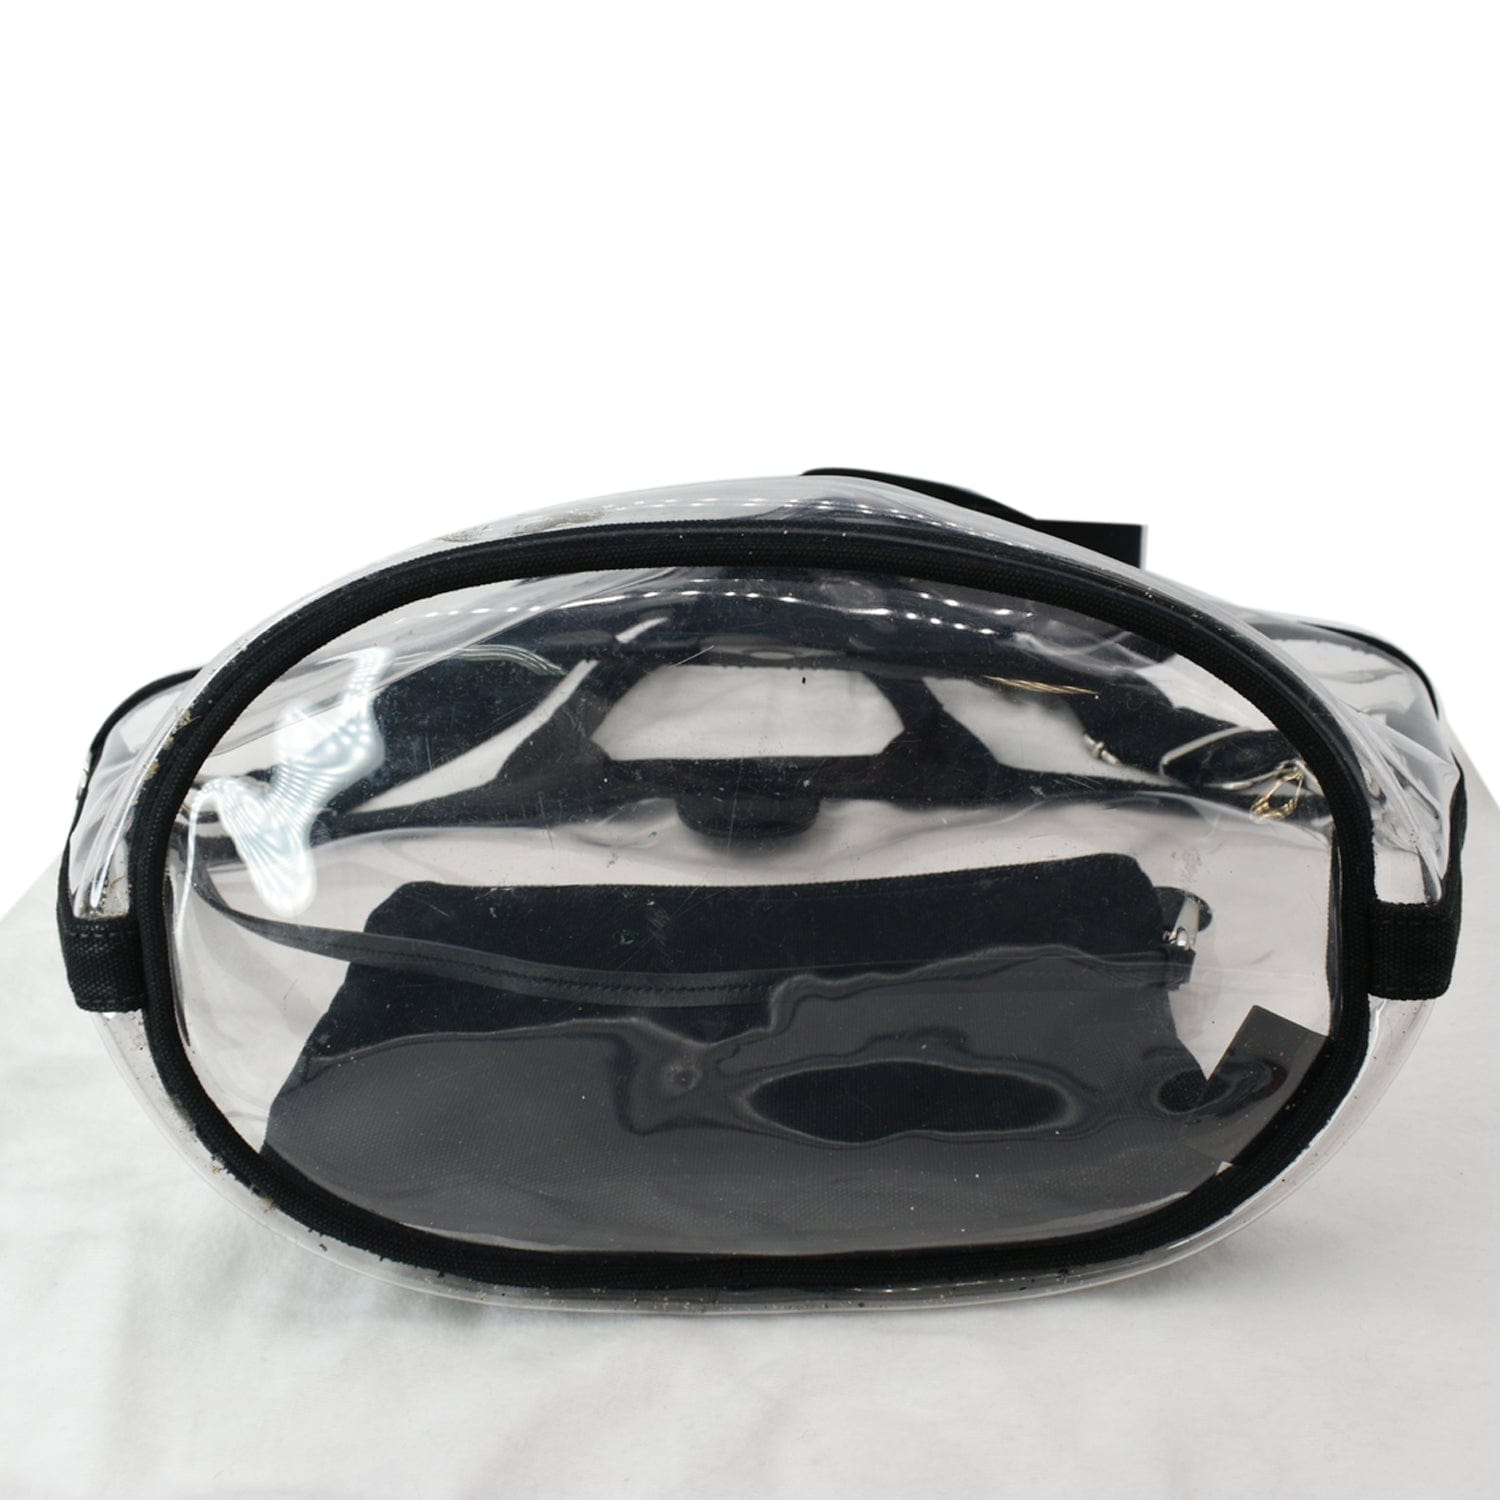 Plexi bag tote Prada Black in Plastic - 12096301